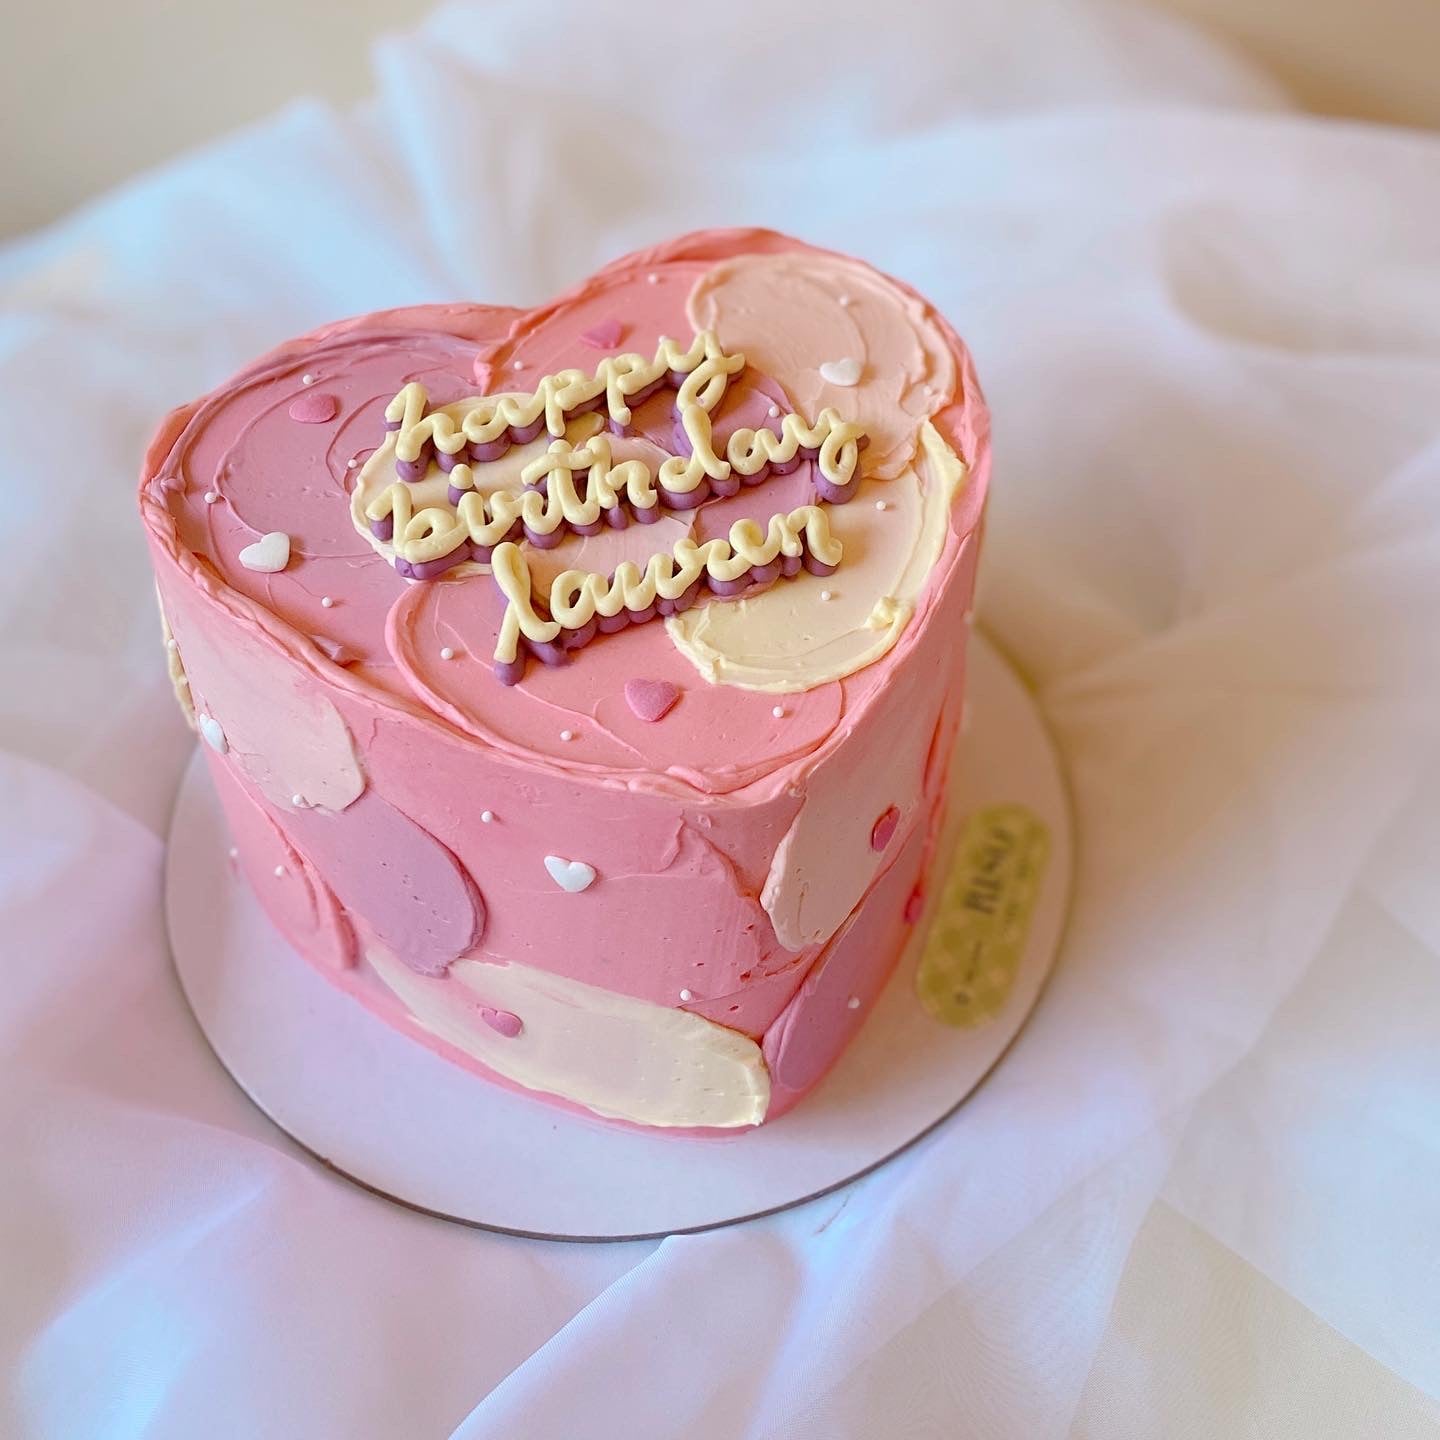 Get the We Heart It app! | Heart shape cake design, Cute birthday cakes,  Cute cakes